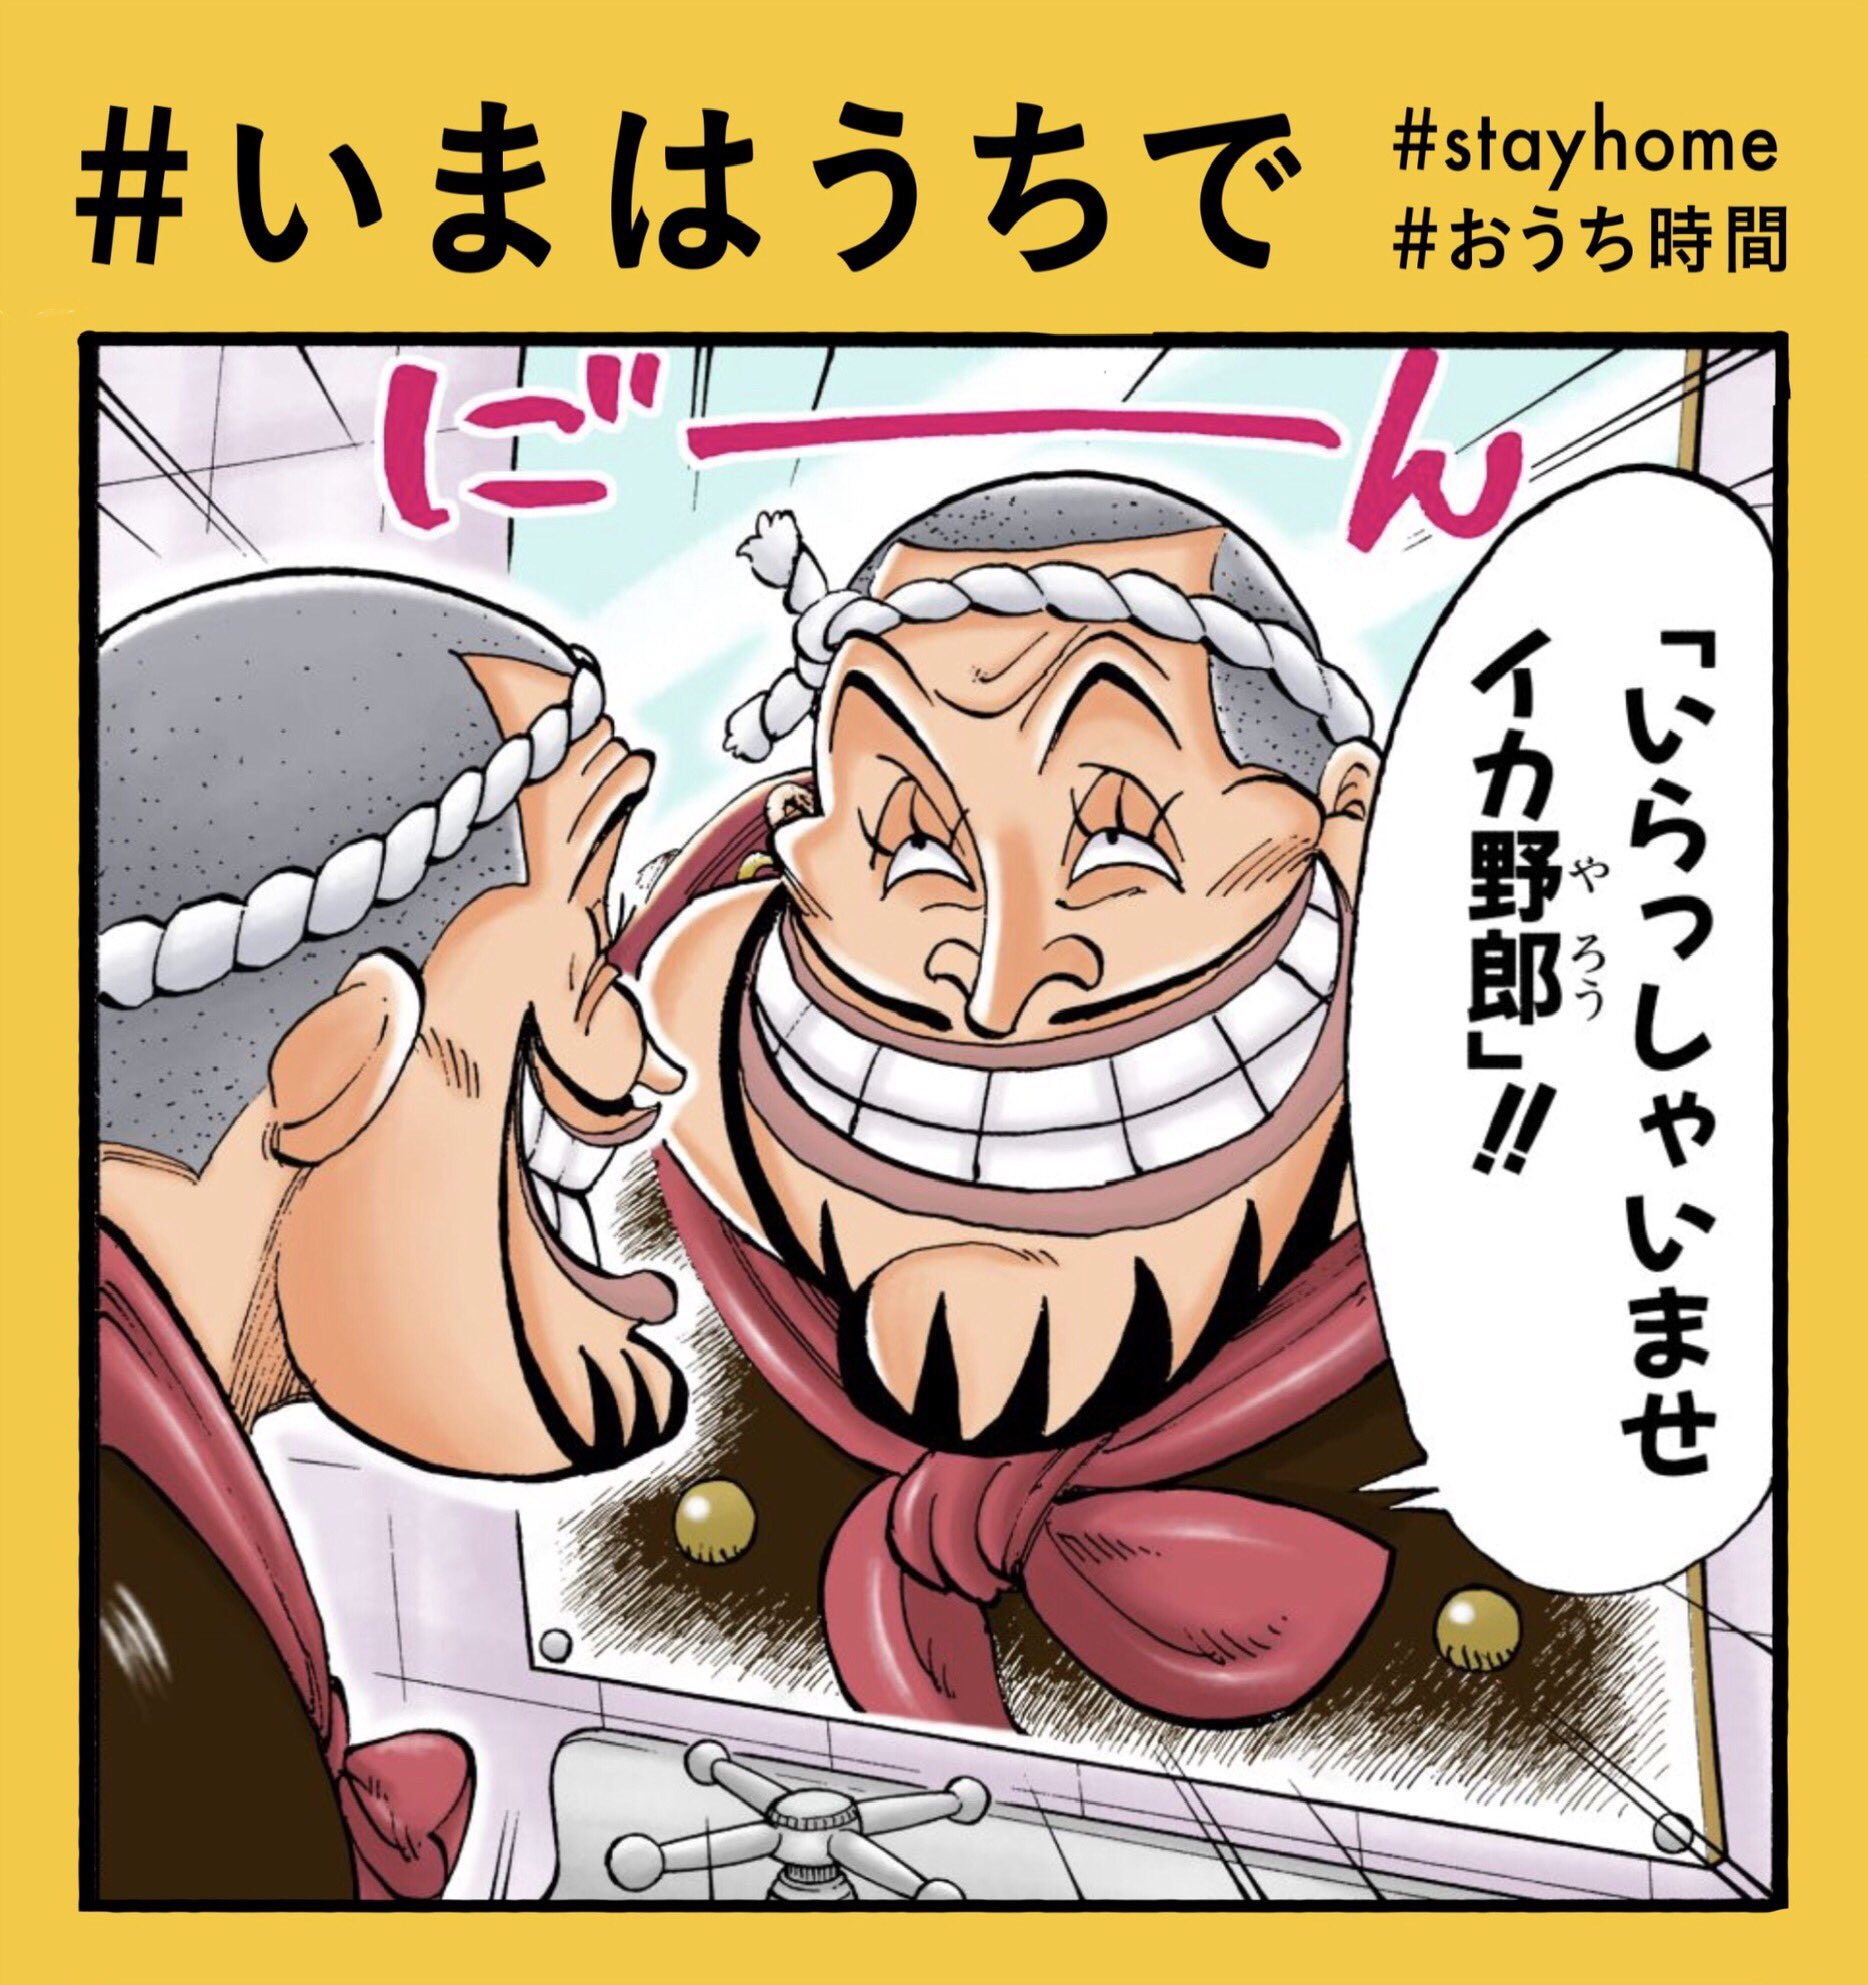 One Piece スタッフ 公式 Official 4月30日 パティの おうち時間 いまはうちで 笑顔の練習は欠かさない Stayhome T Co Iwtjhmqkg9 Twitter